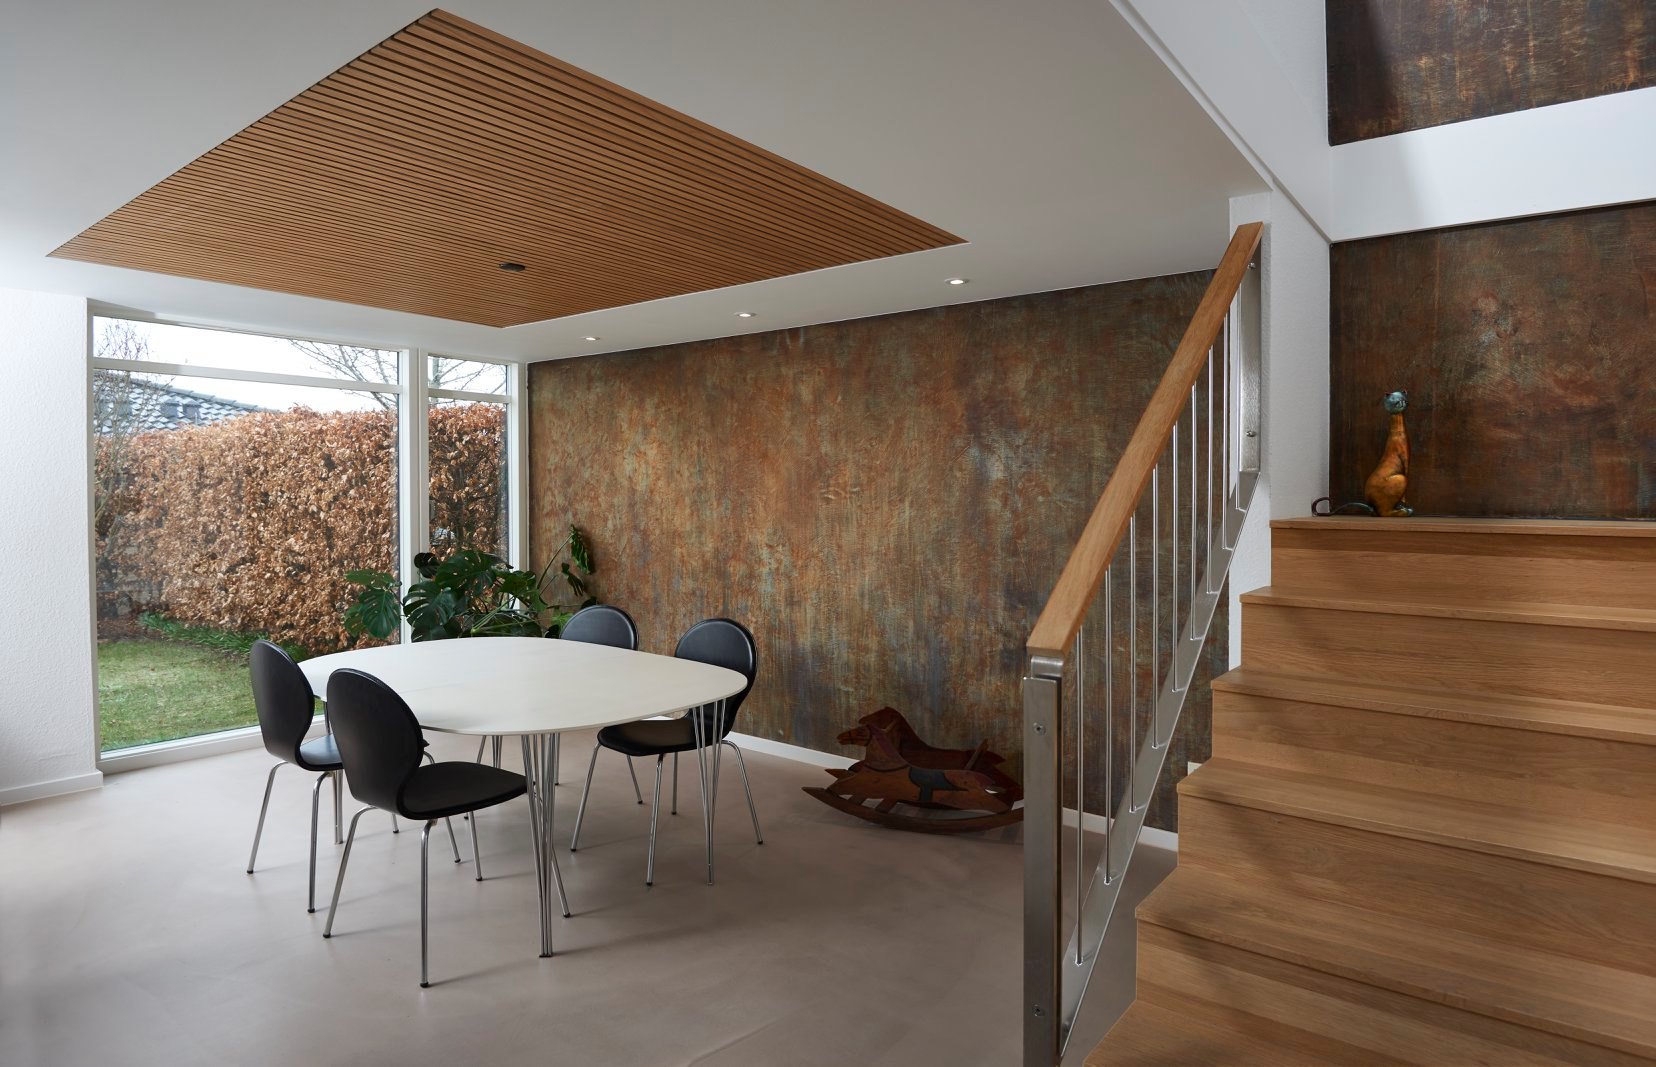 Stena obývačky obložená oxidovou farbou